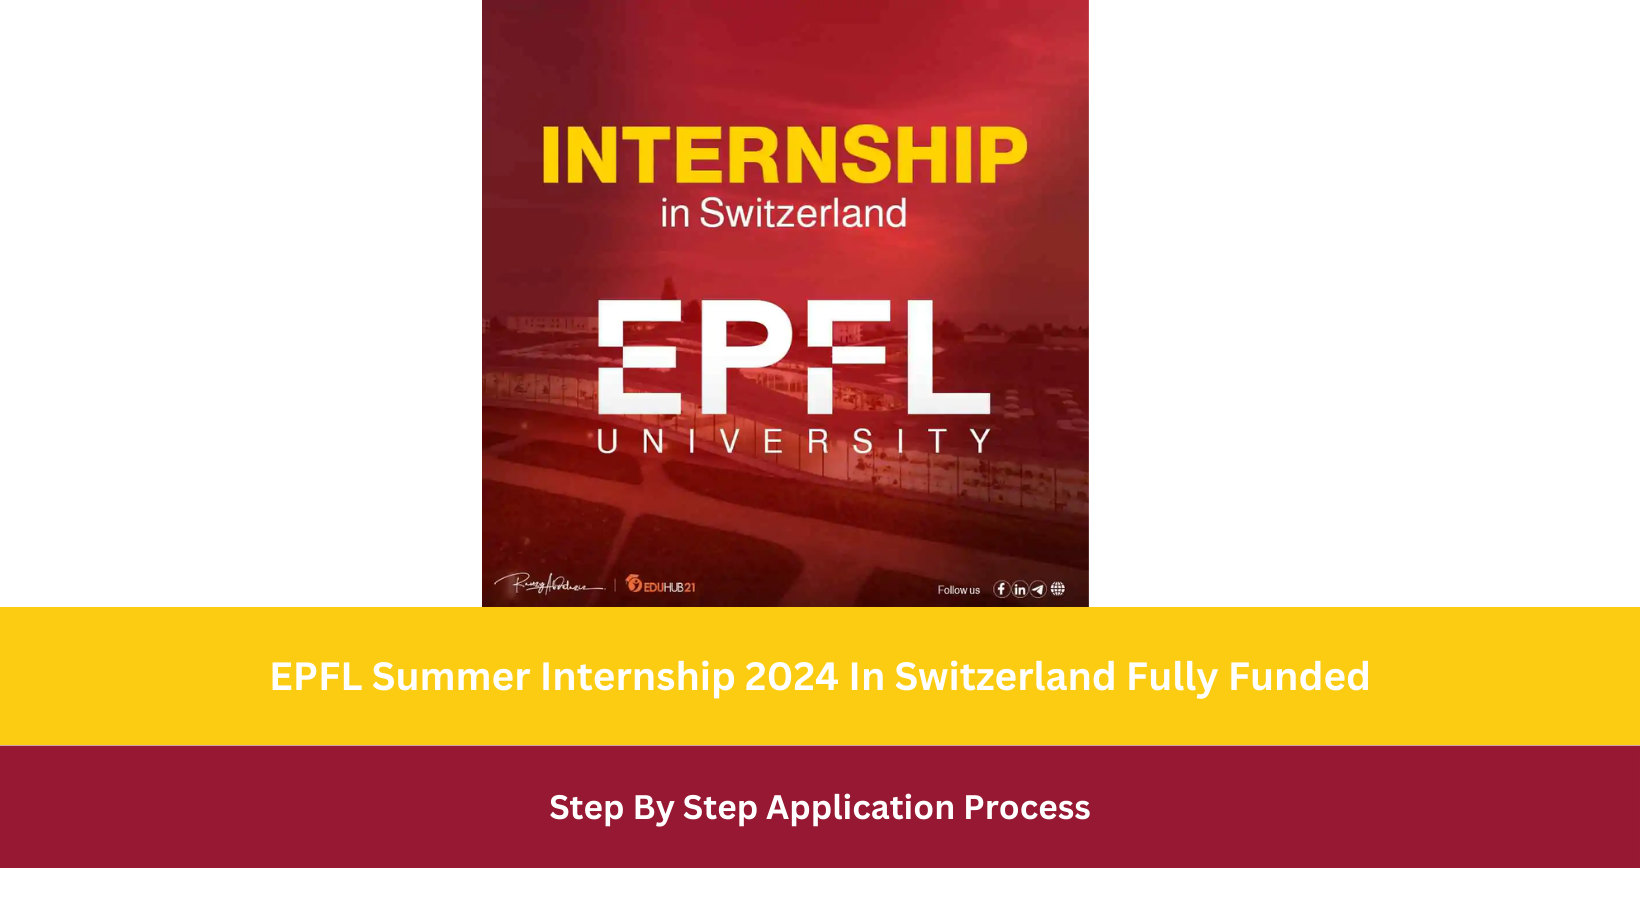 EPFL Summer Internship 2024 in Switzerland Fully Funded